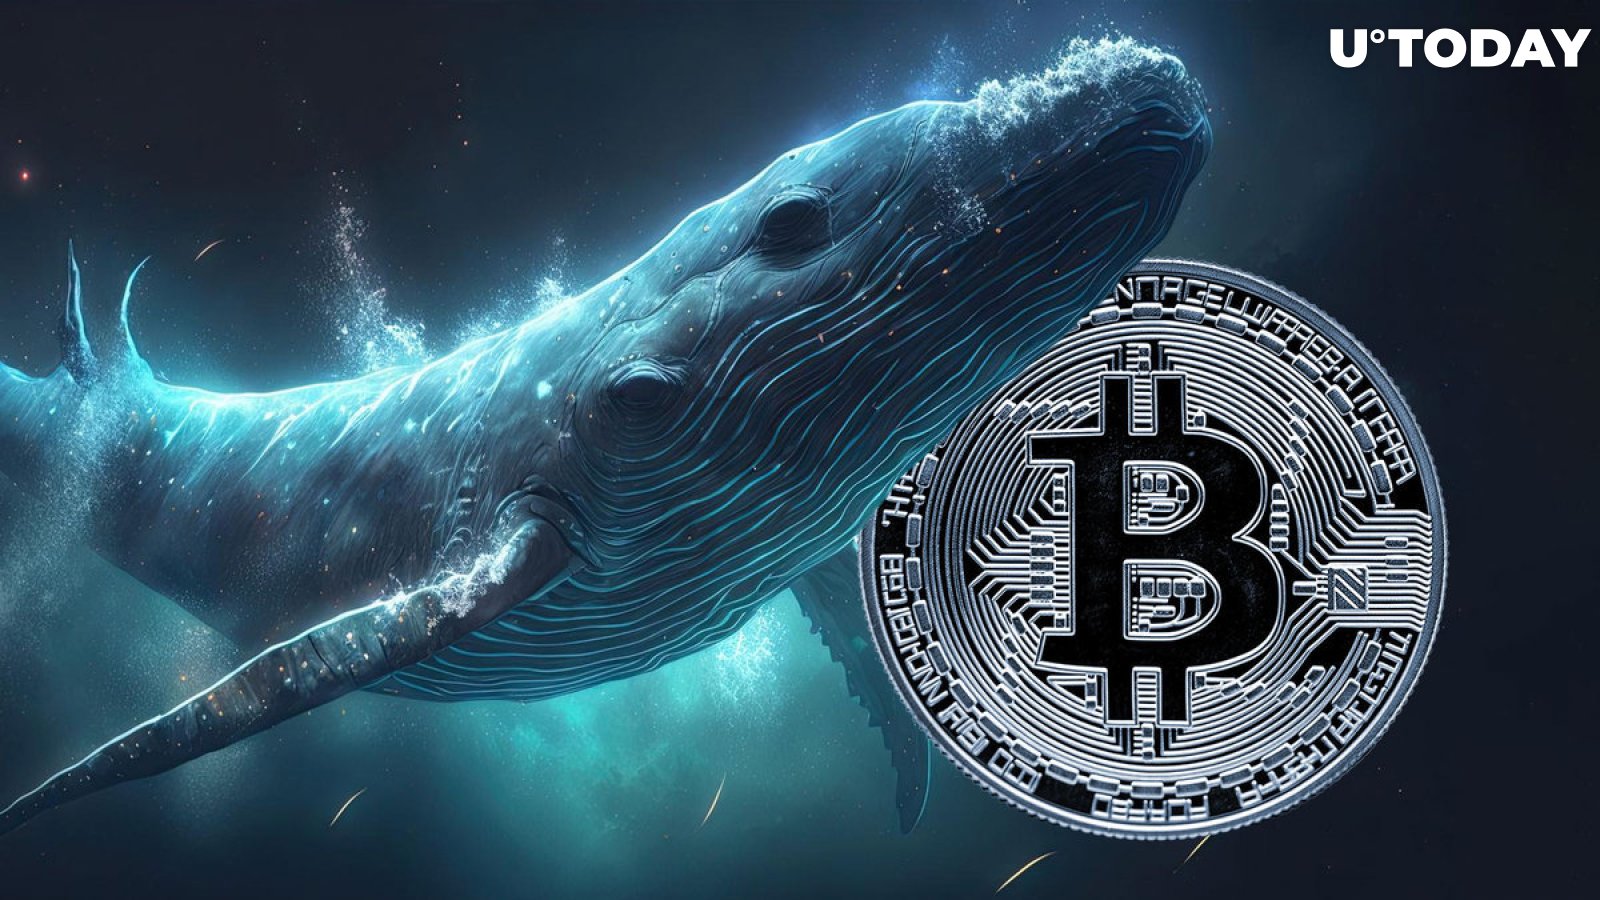 Bitcoin (BTC) Witnesses Half Billion Worth of Whale Activity With One Secret Transfer